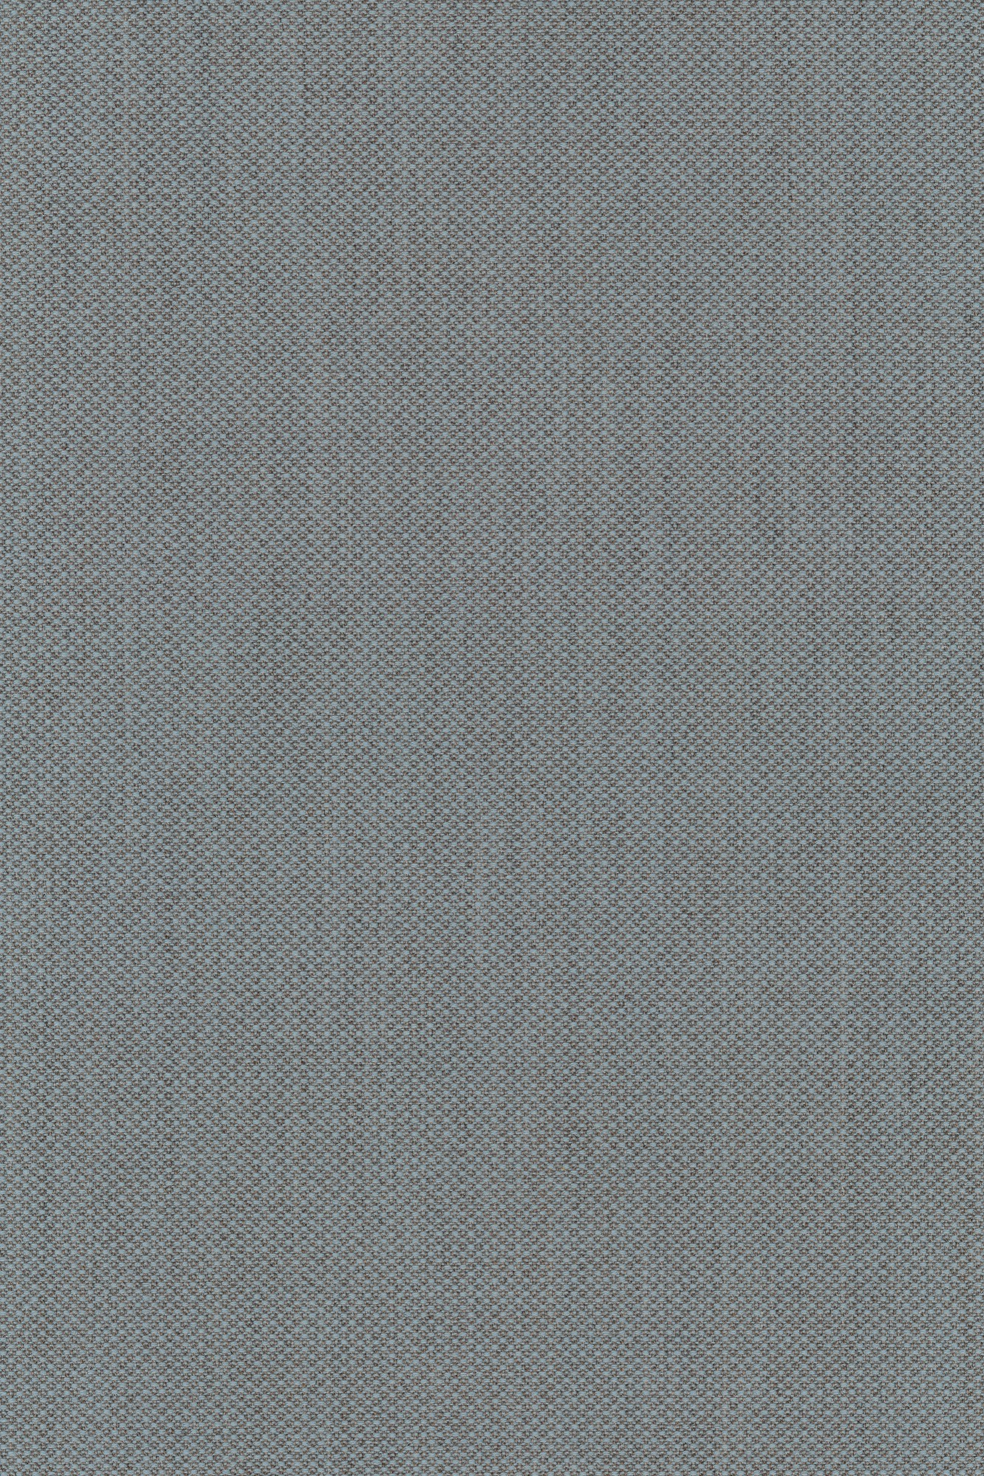 Fabric sample Fiord 821 blue